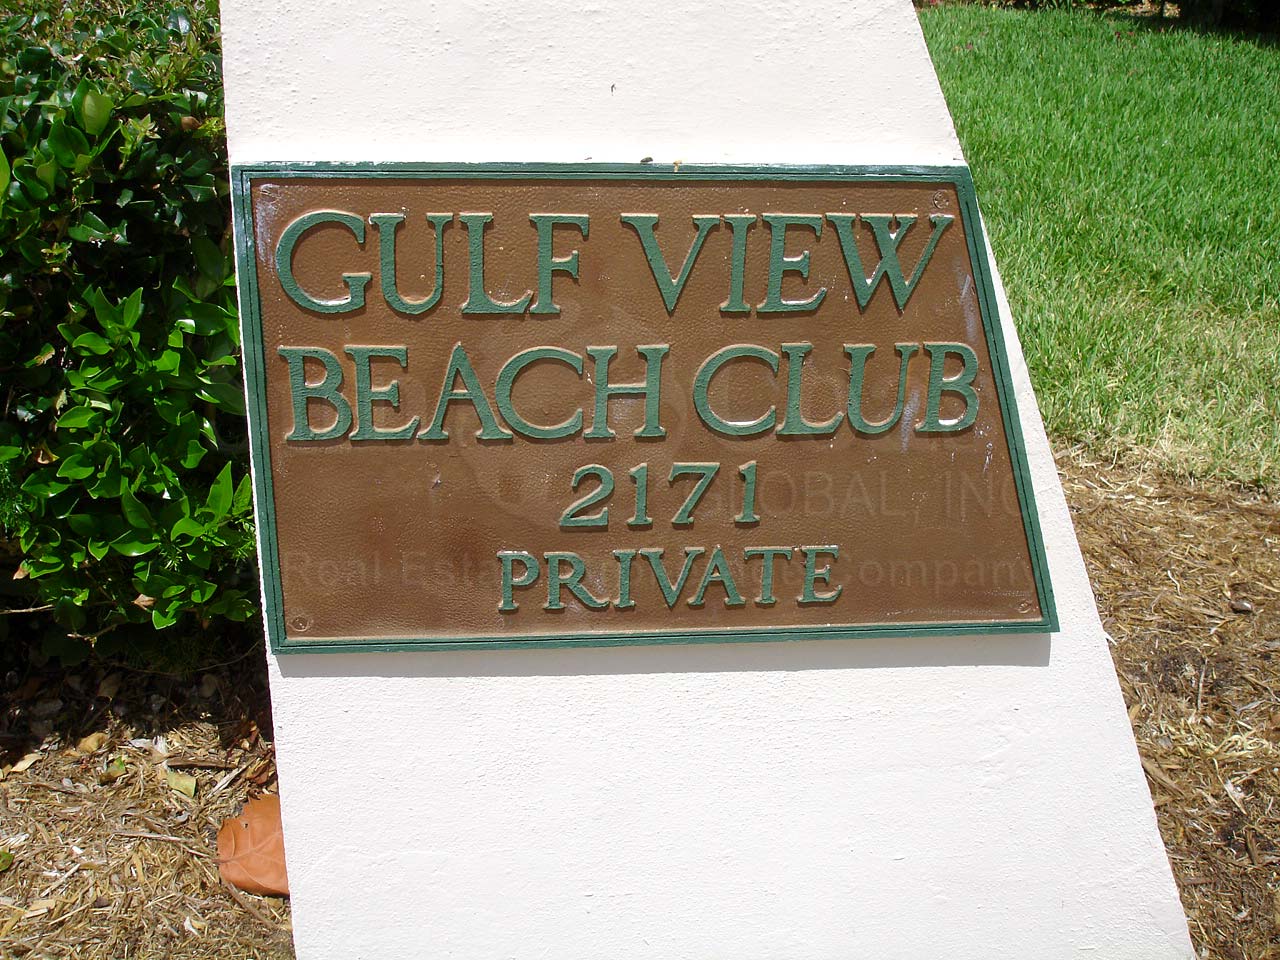 Gulf View Beach Club Signage